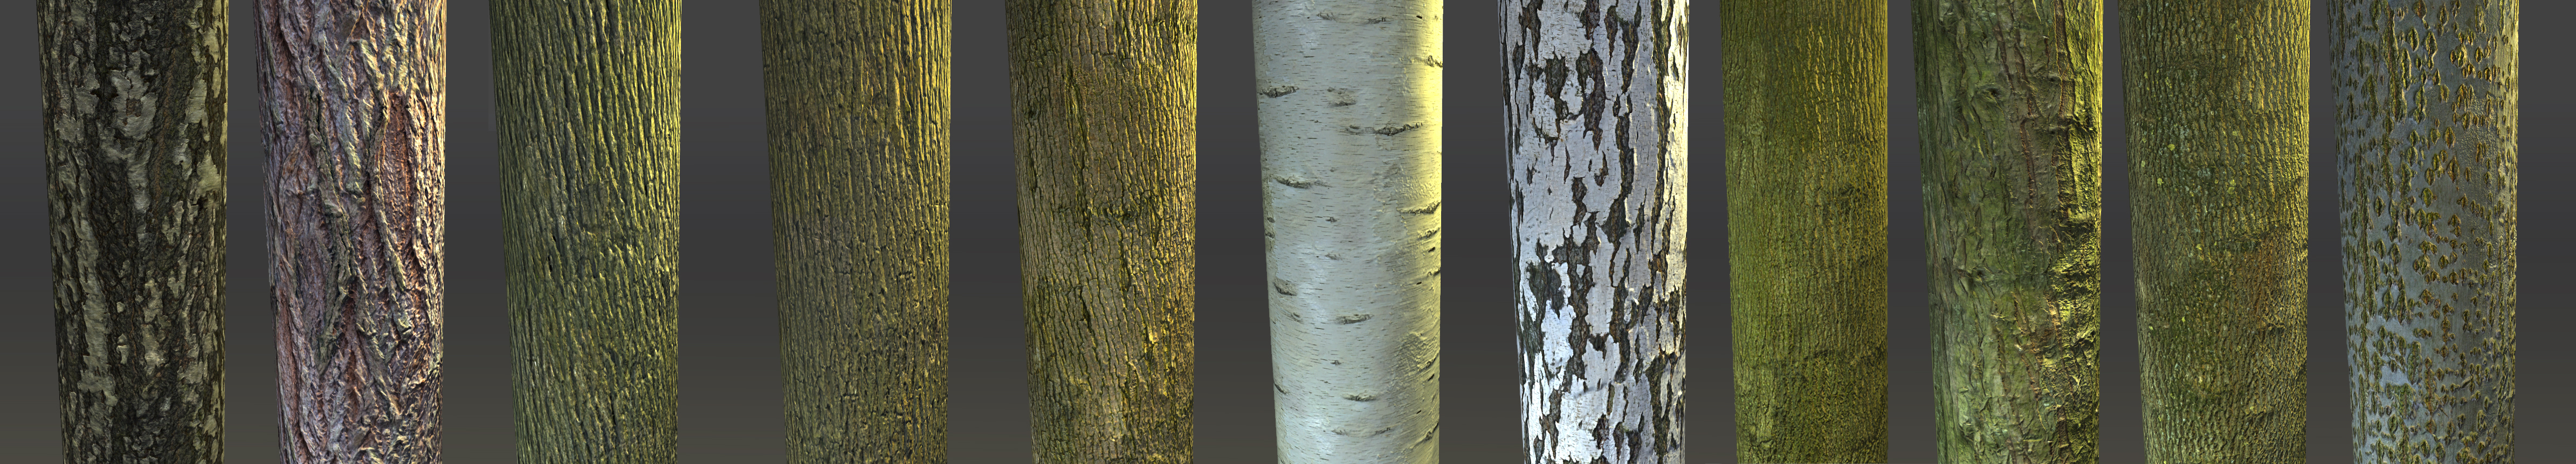 Pbr Tree Bark Texture Pack - Unity Forum